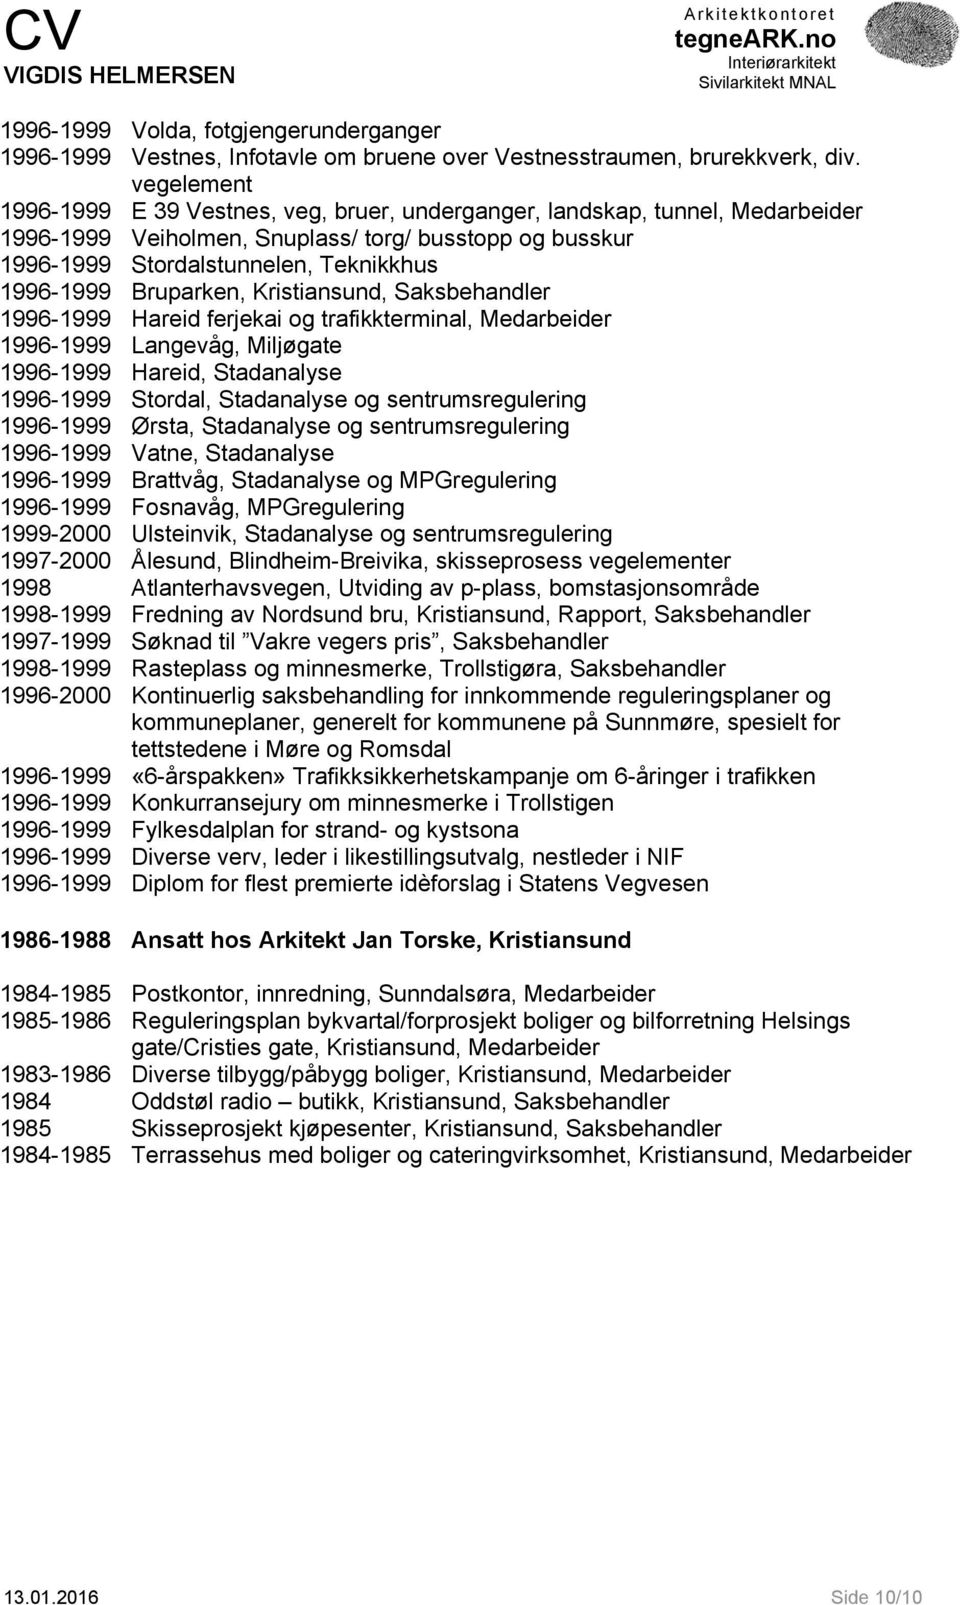 Bruparken, Kristiansund, Saksbehandler 1996-1999 Hareid ferjekai og trafikkterminal, Medarbeider 1996-1999 Langevåg, Miljøgate 1996-1999 Hareid, Stadanalyse 1996-1999 Stordal, Stadanalyse og